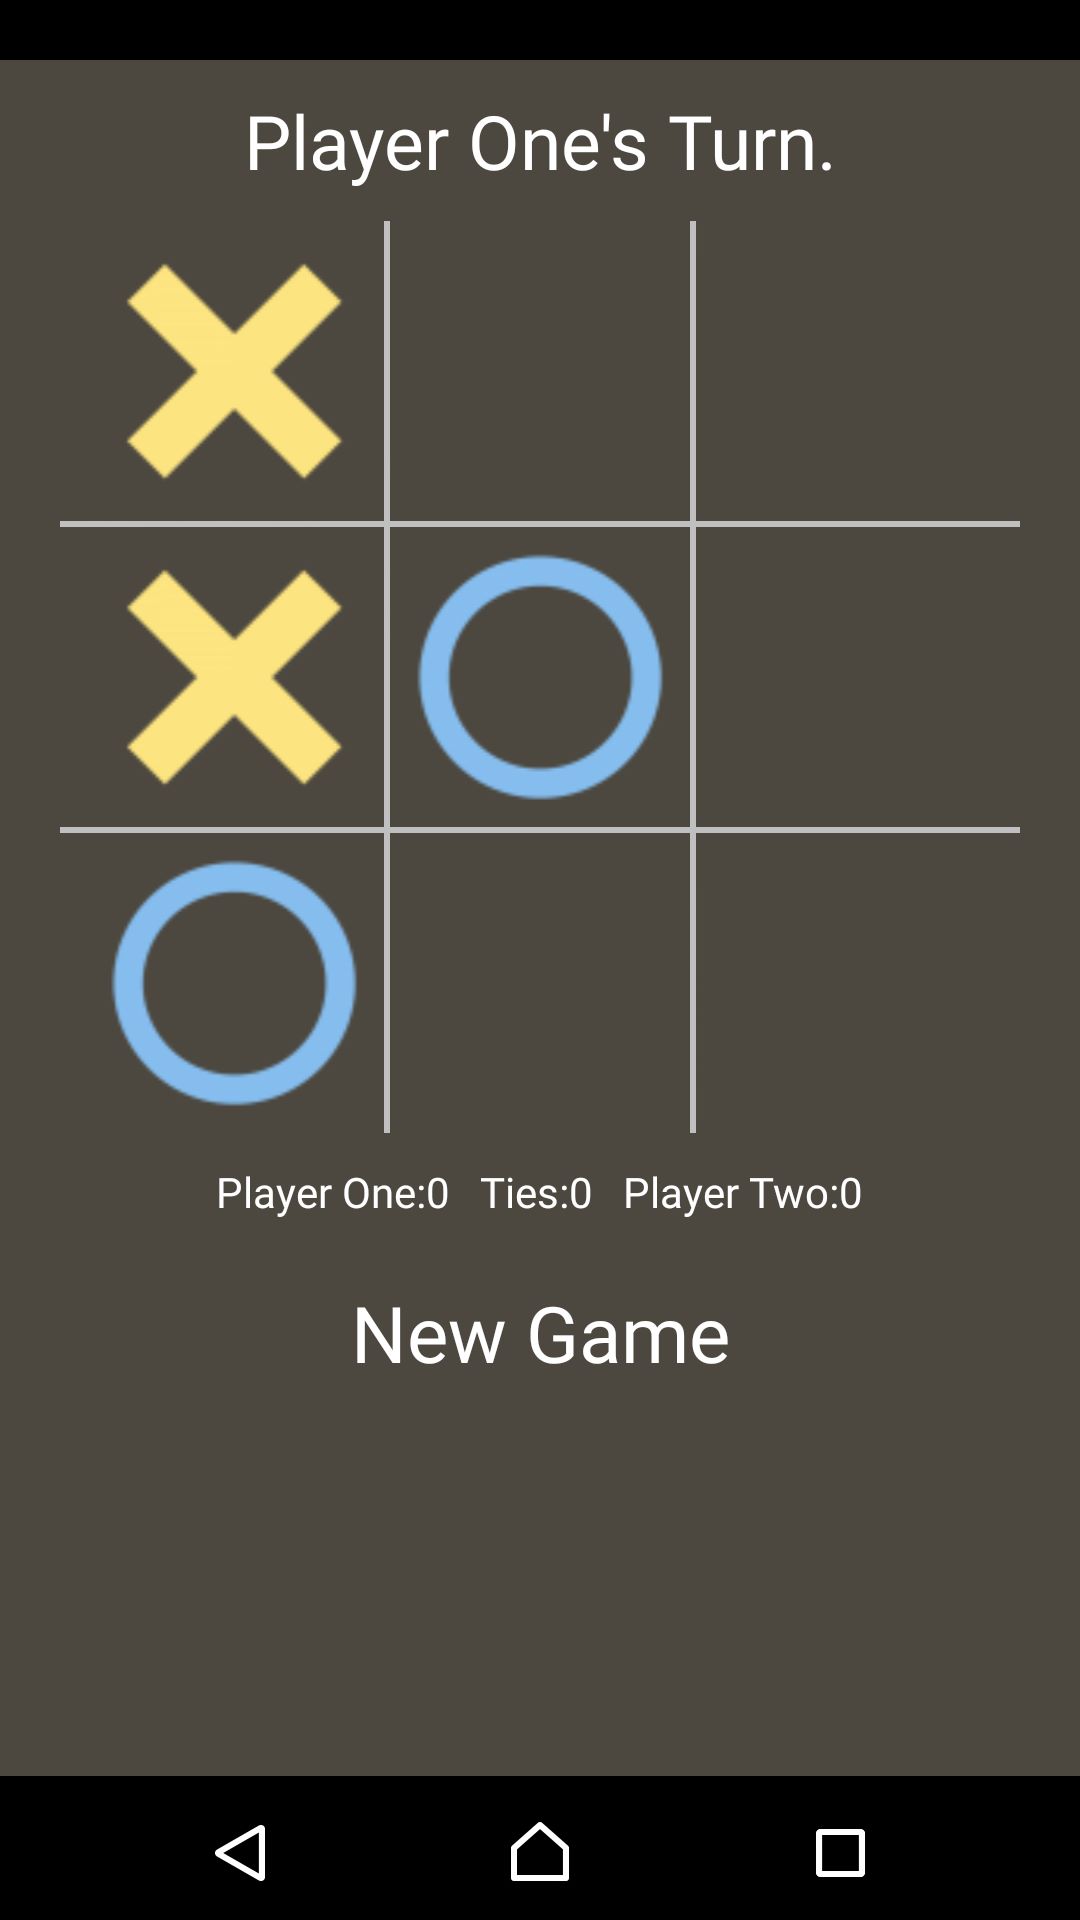 Tic Tac Toe 2 Player XO Game - Microsoft Apps